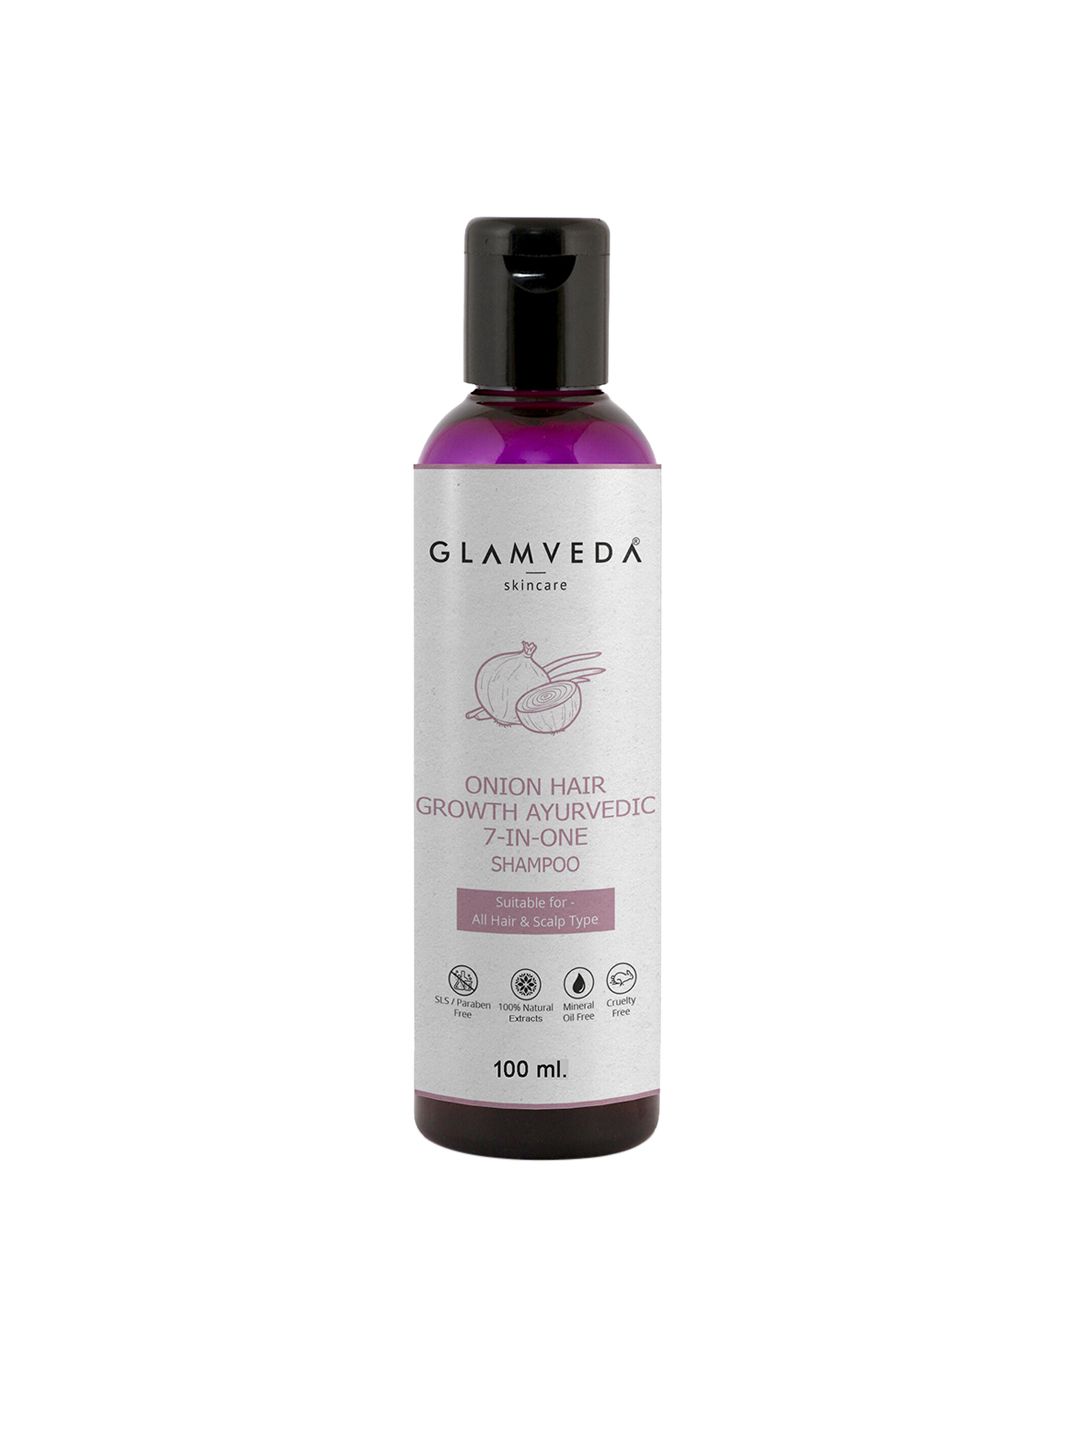 GLAMVEDA Onion Hair Growth Ayurvedic 7-In-One Shampoo - 100 ml Price in India